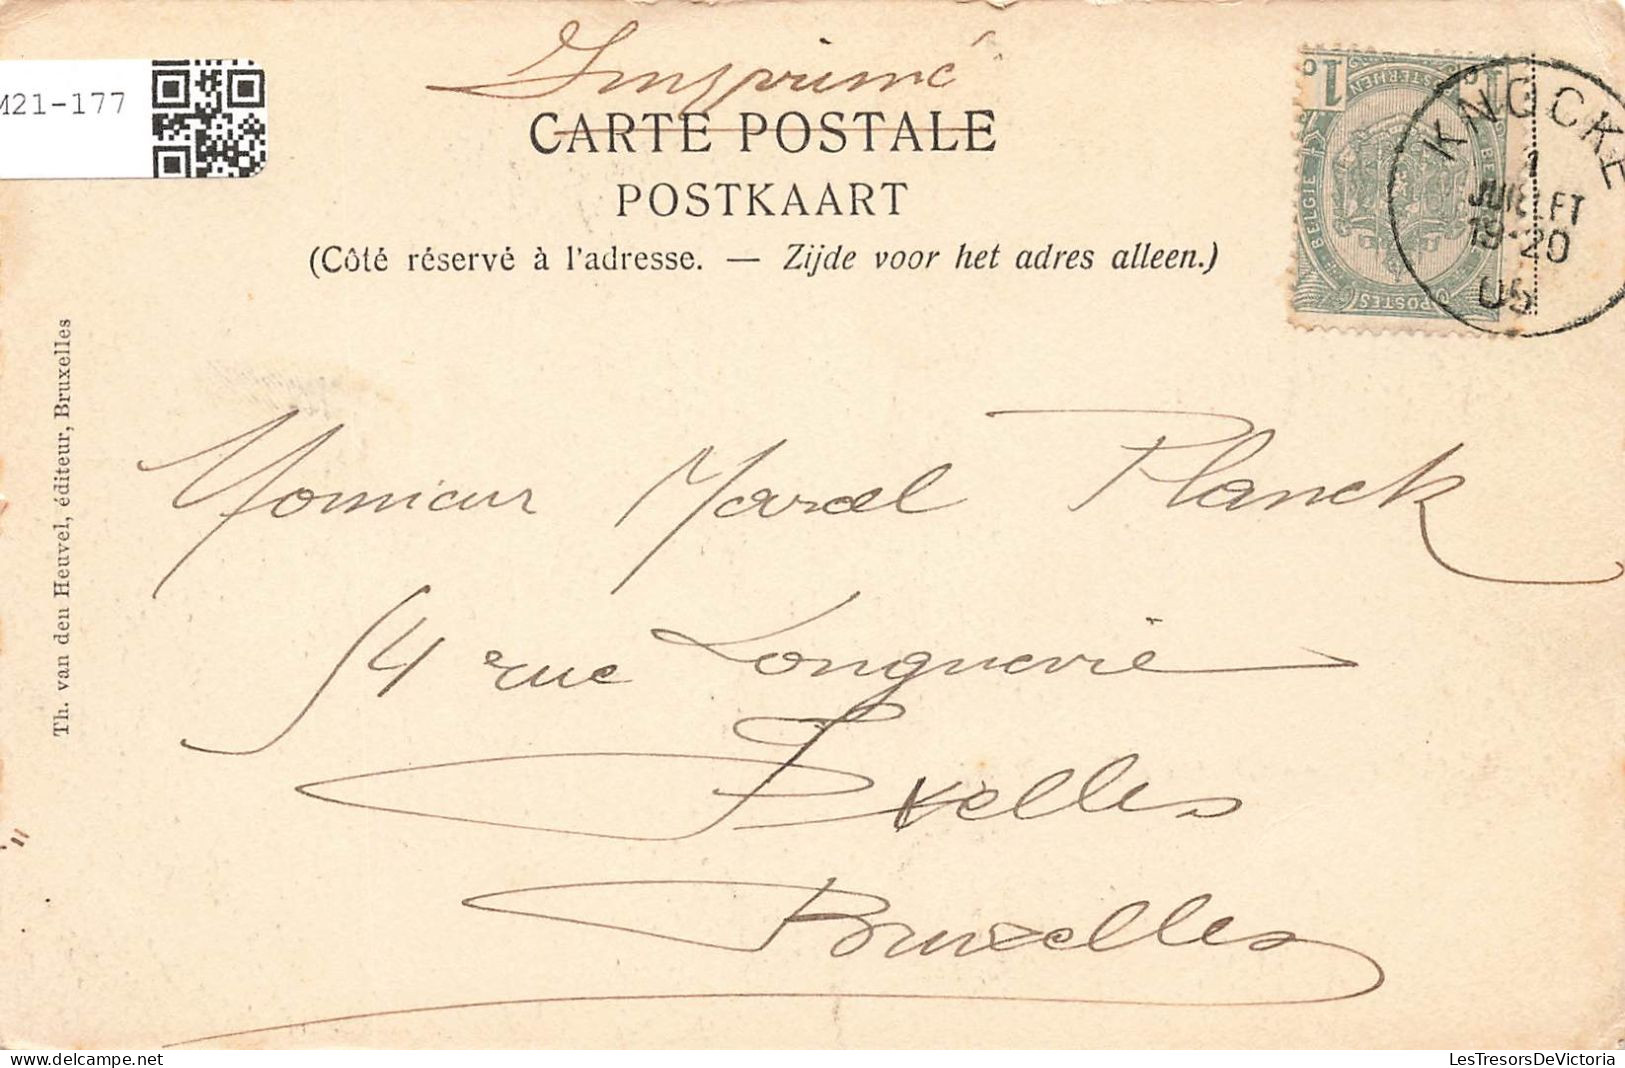 BELGIQUE - Knokke - Chateau Parmentier - Carte Postale Ancienne - Knokke